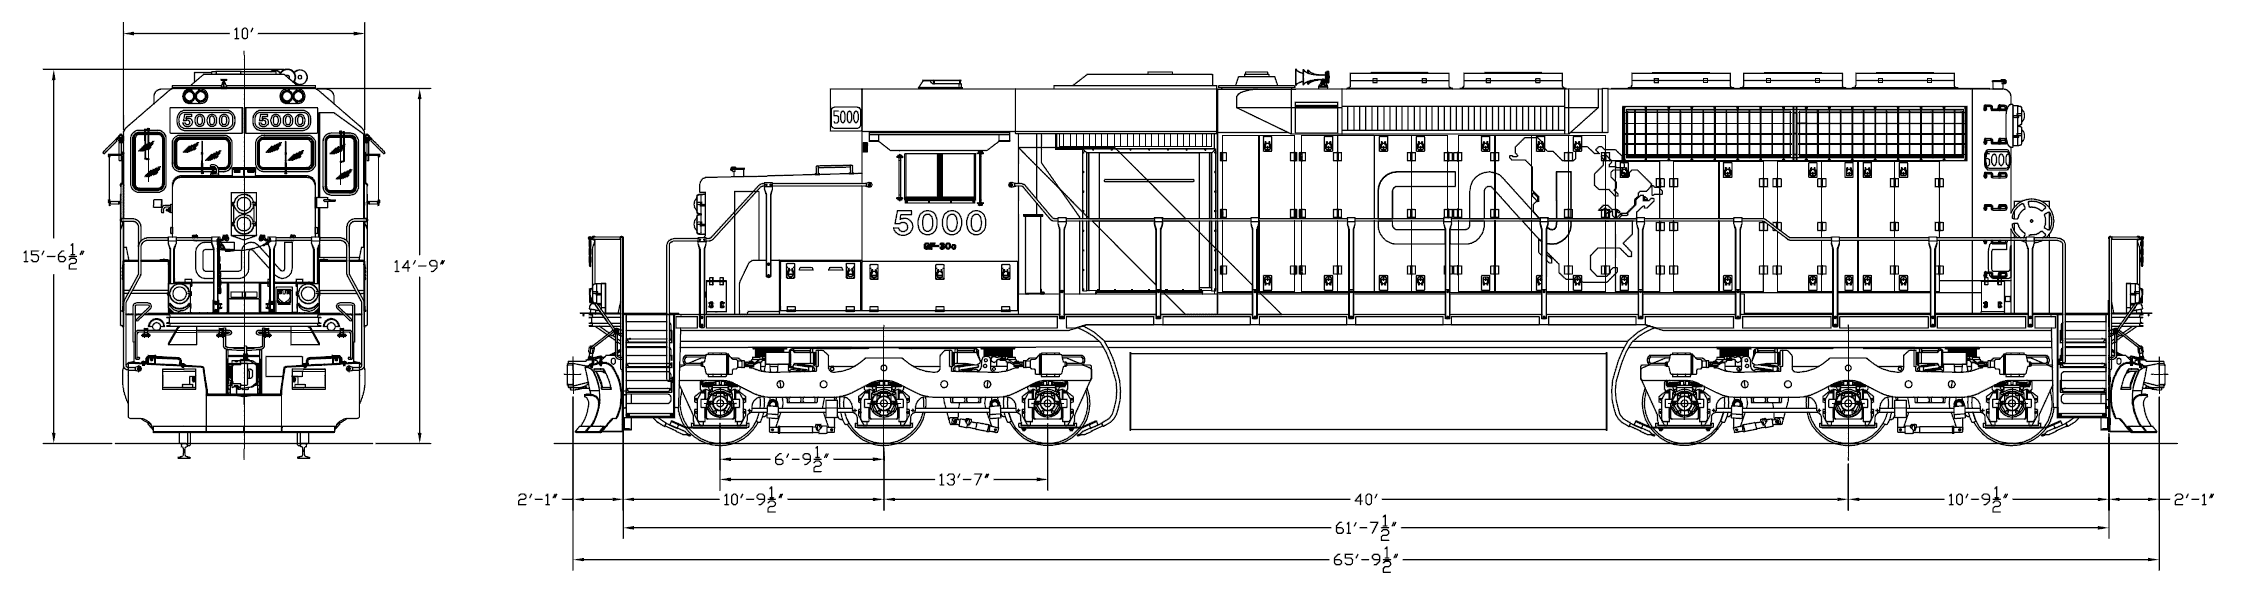 EMD SD40-2 blueprint